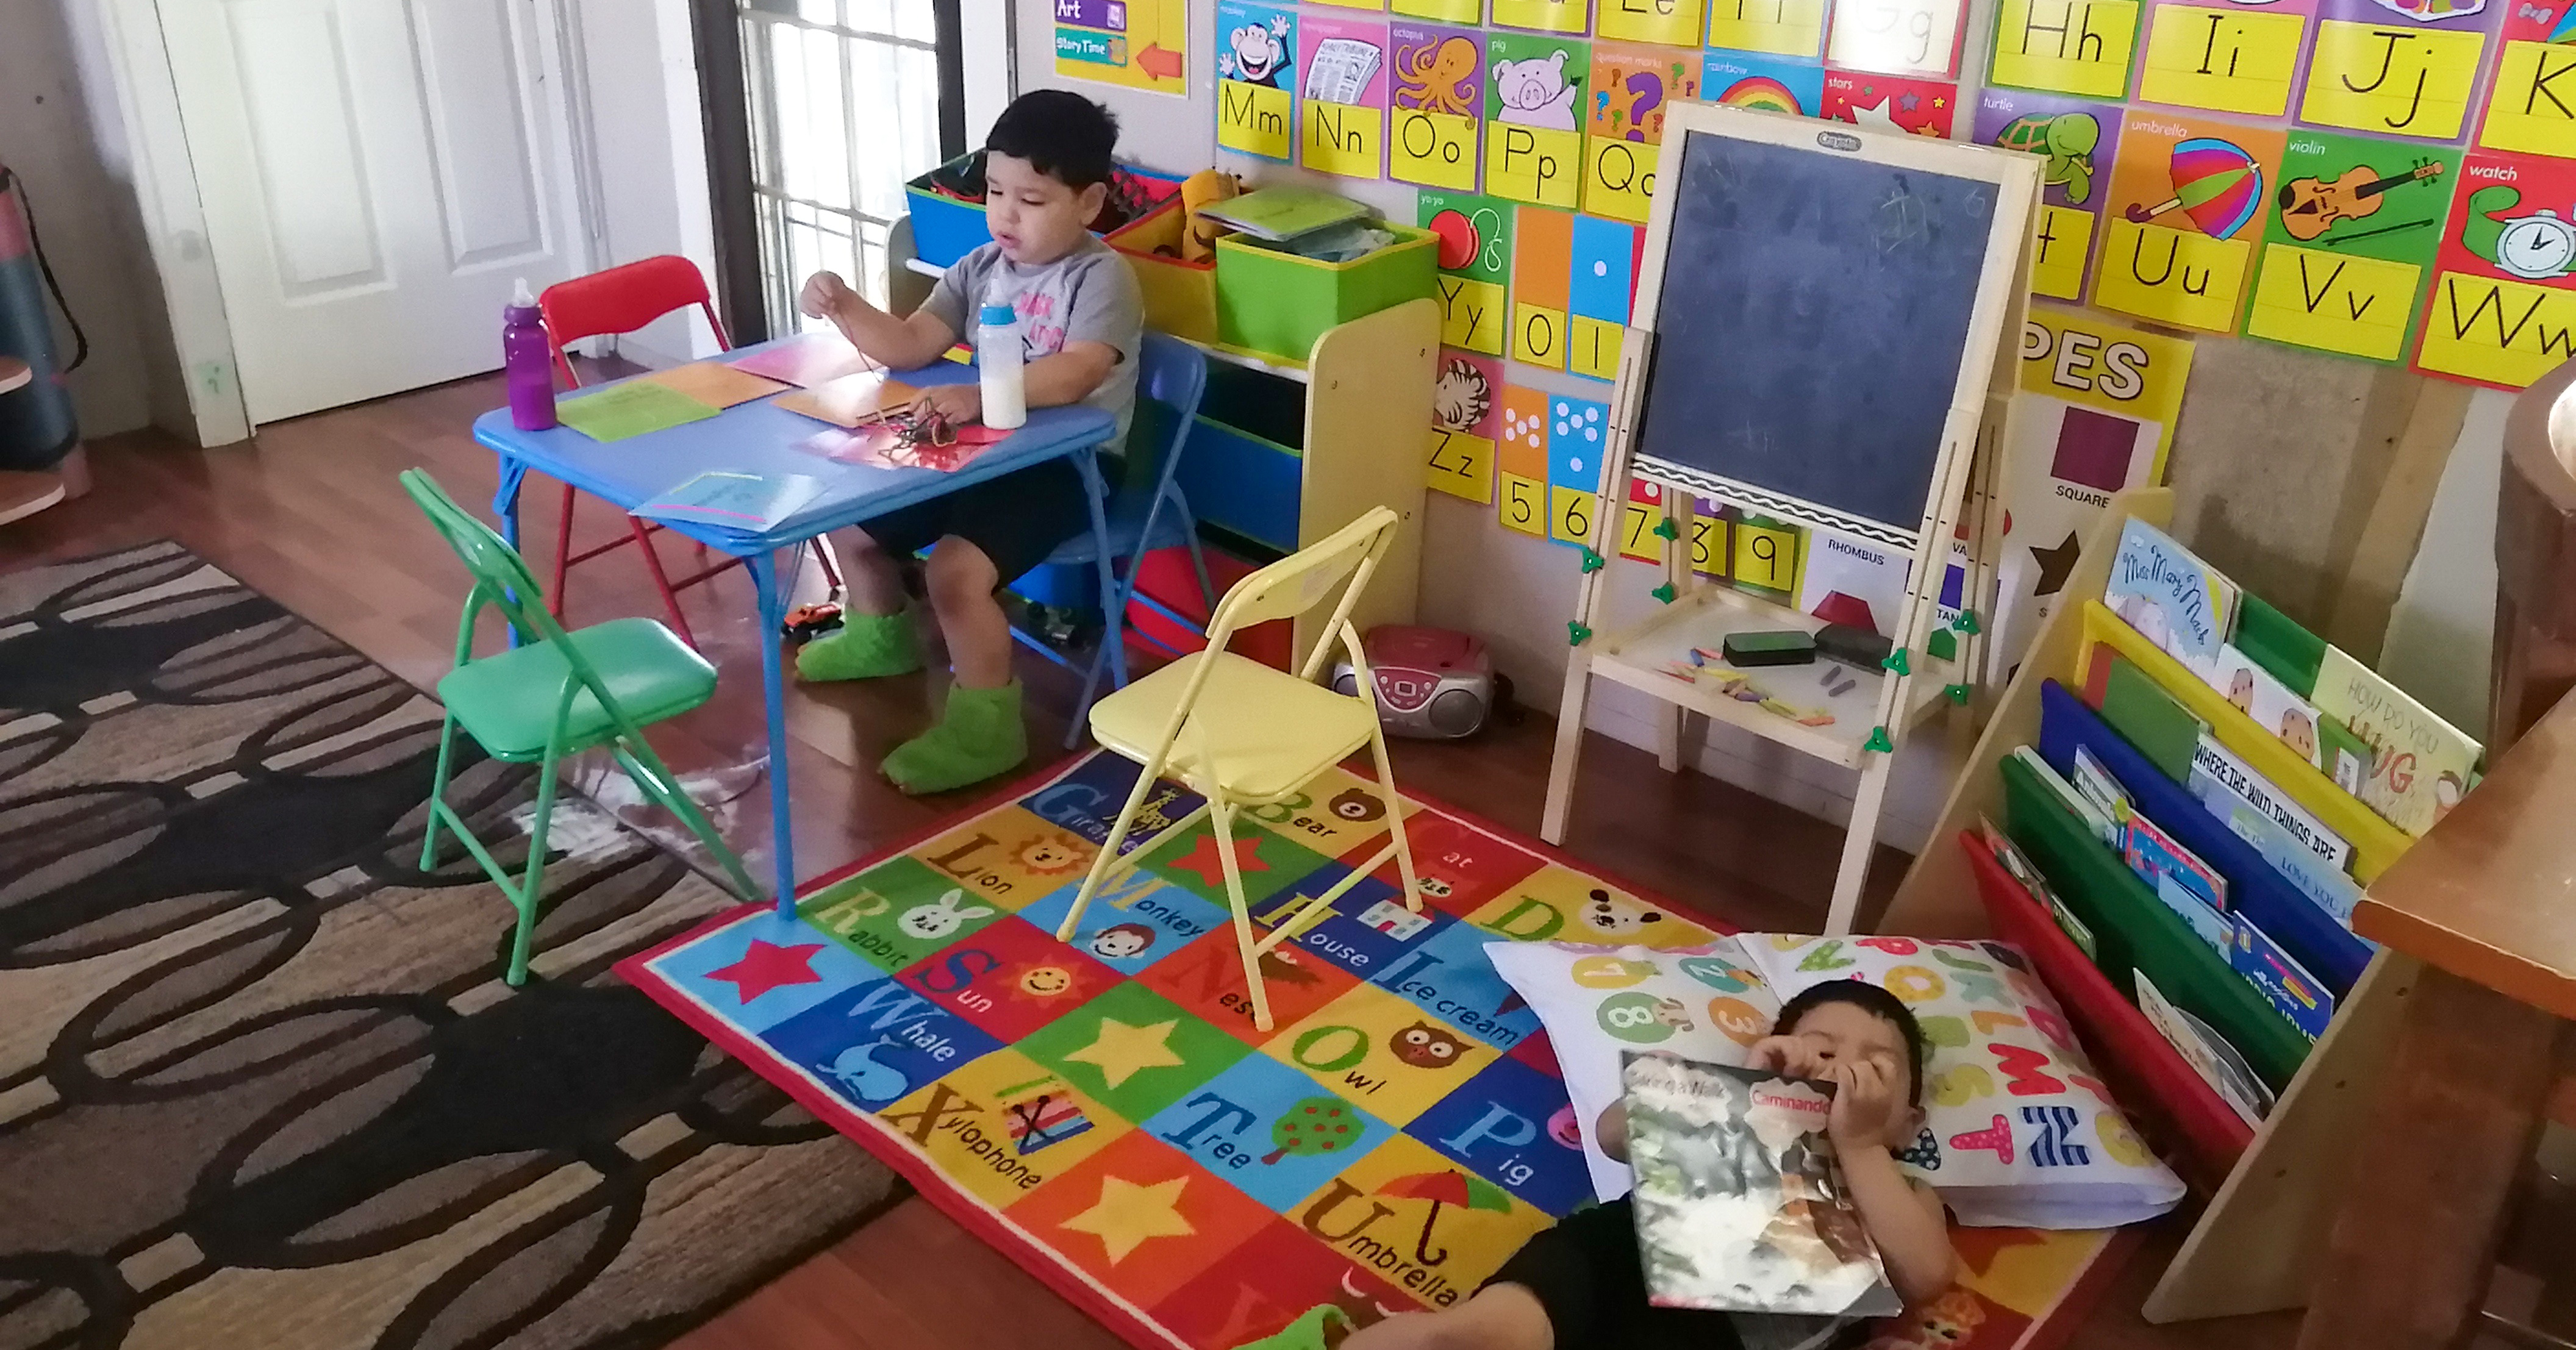 Two boys in a preschool classroom